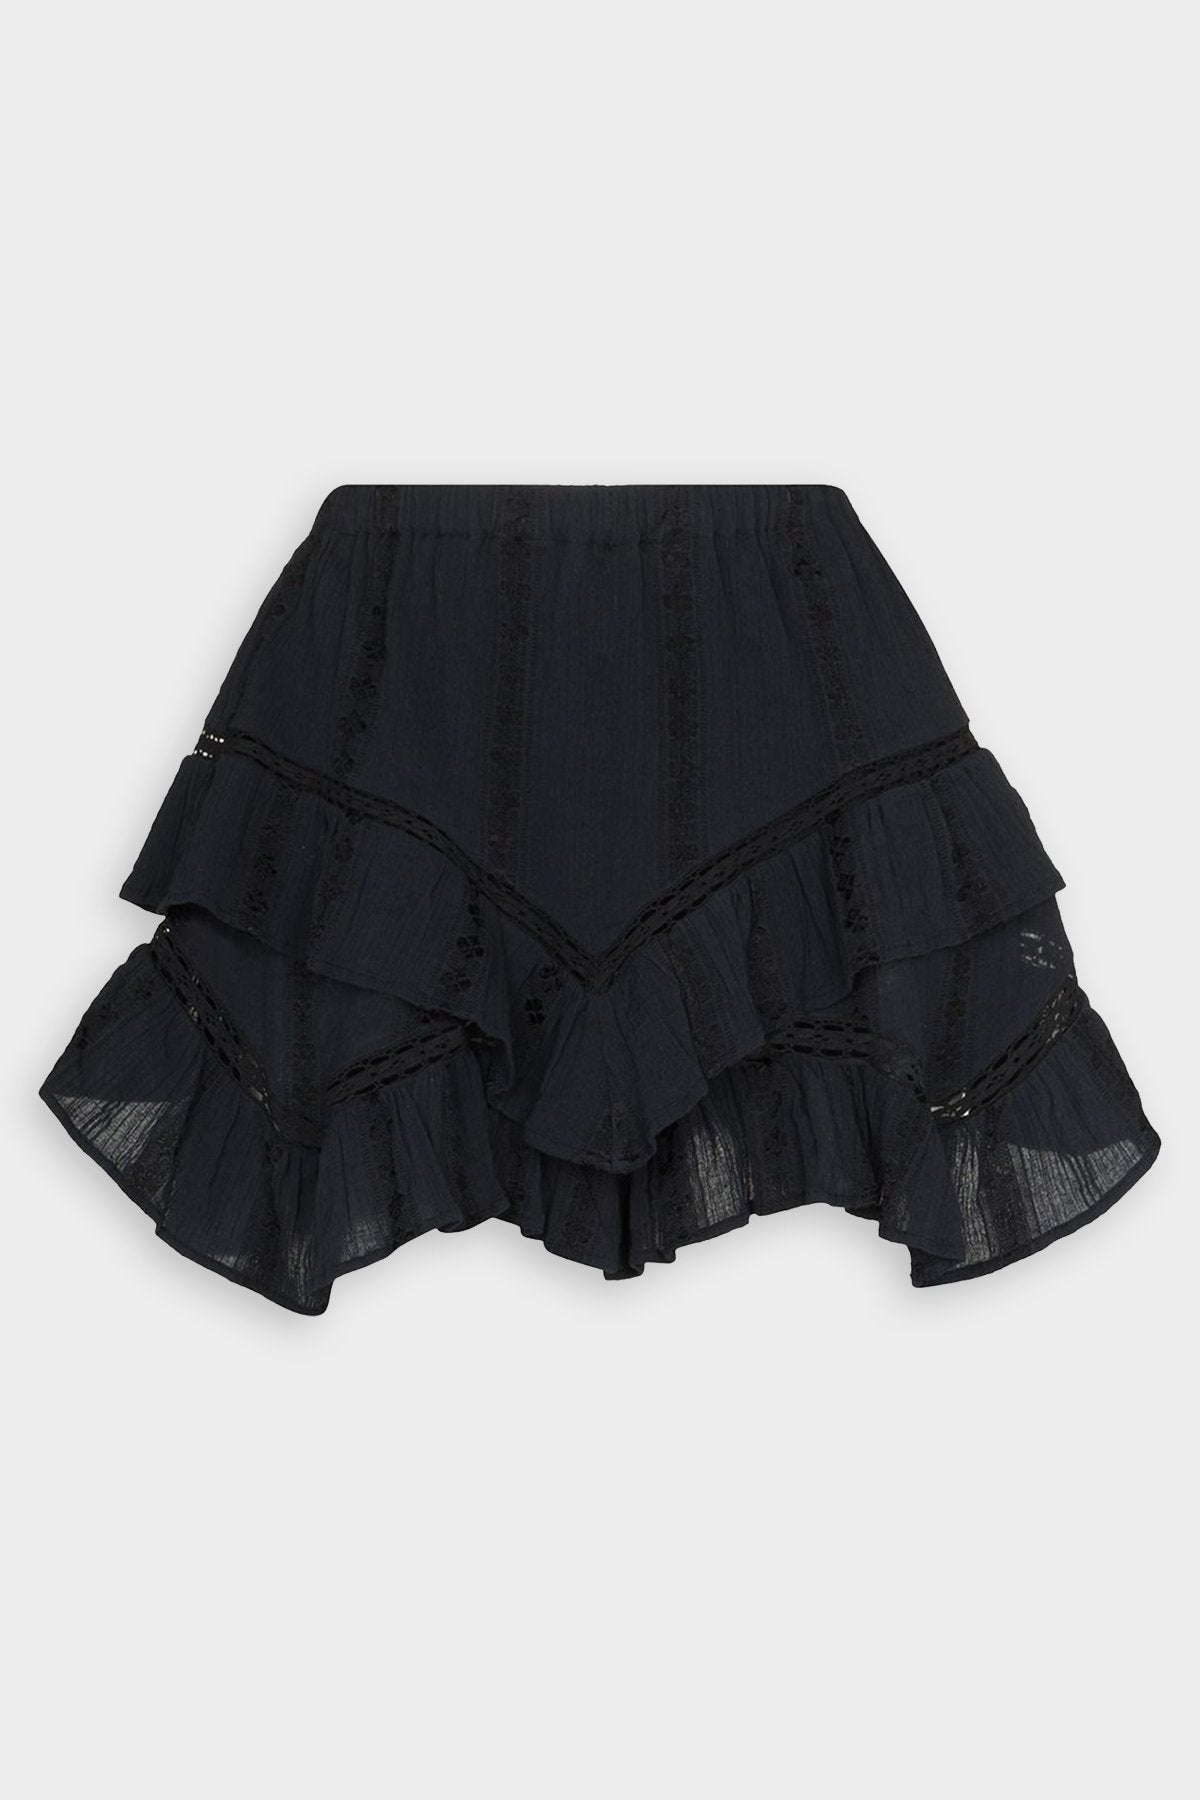 Jocadia Shorts in Black - shop-olivia.com